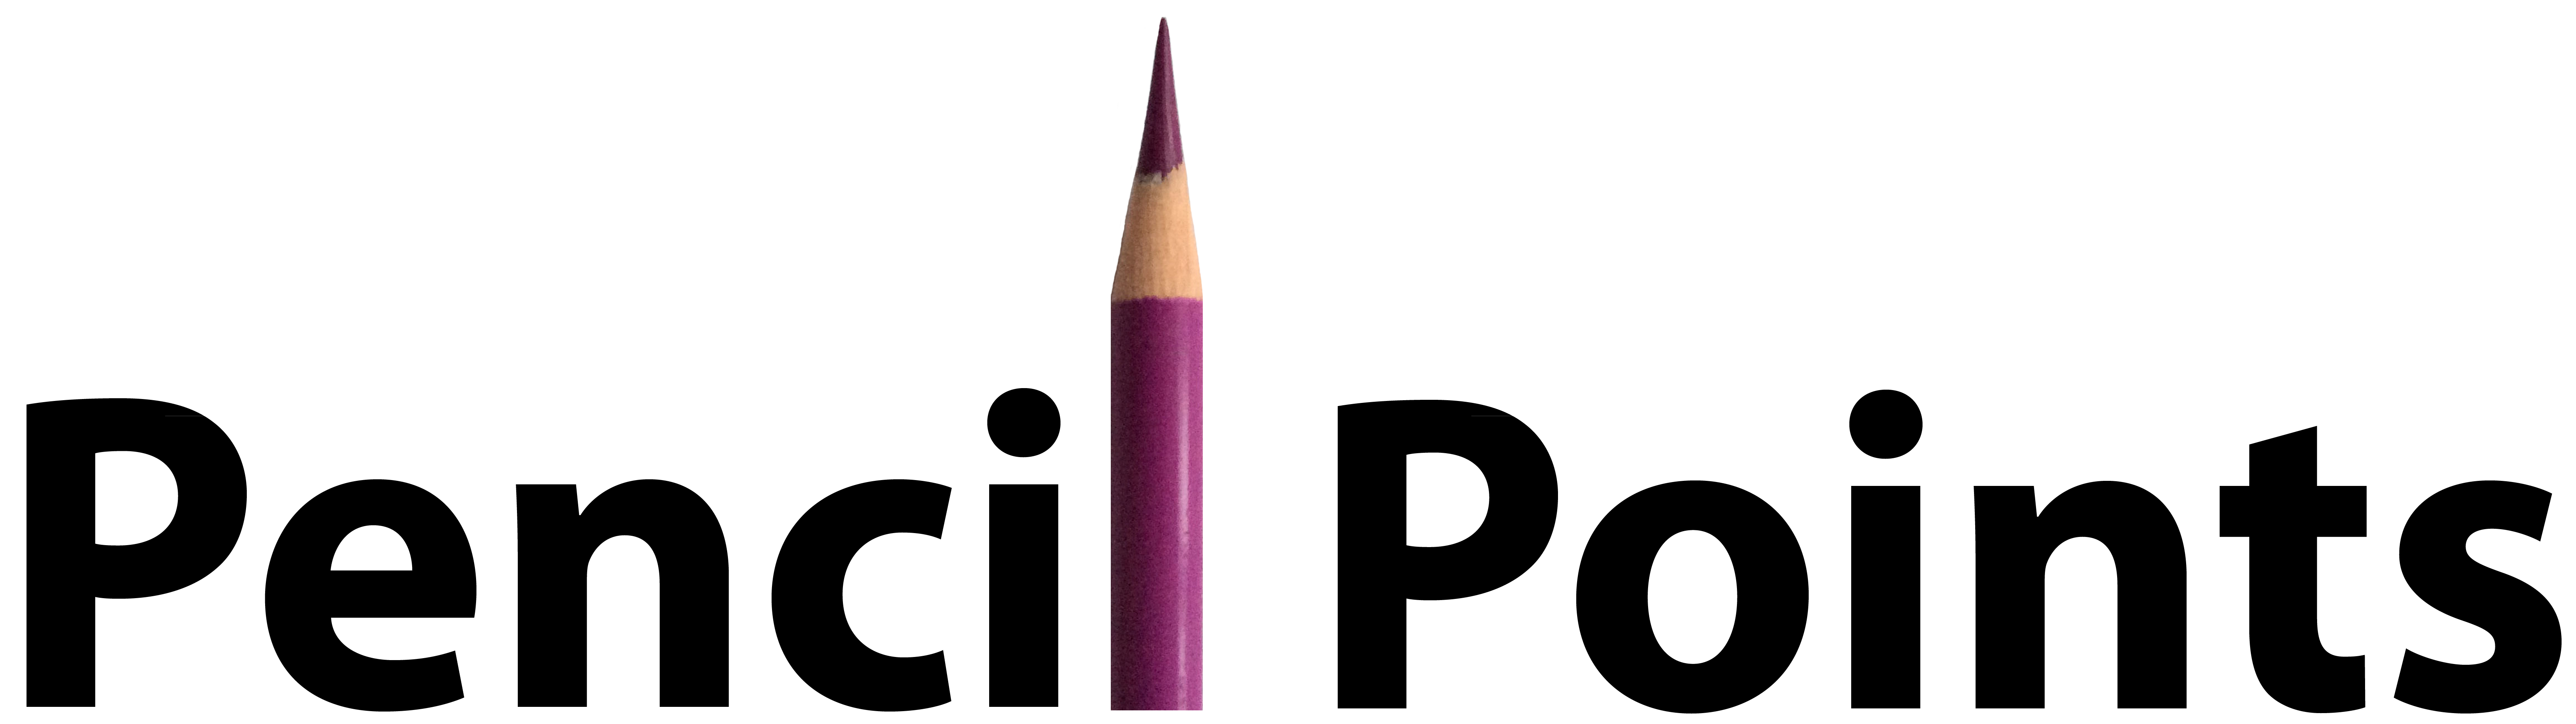 300 Pencil Point logo large